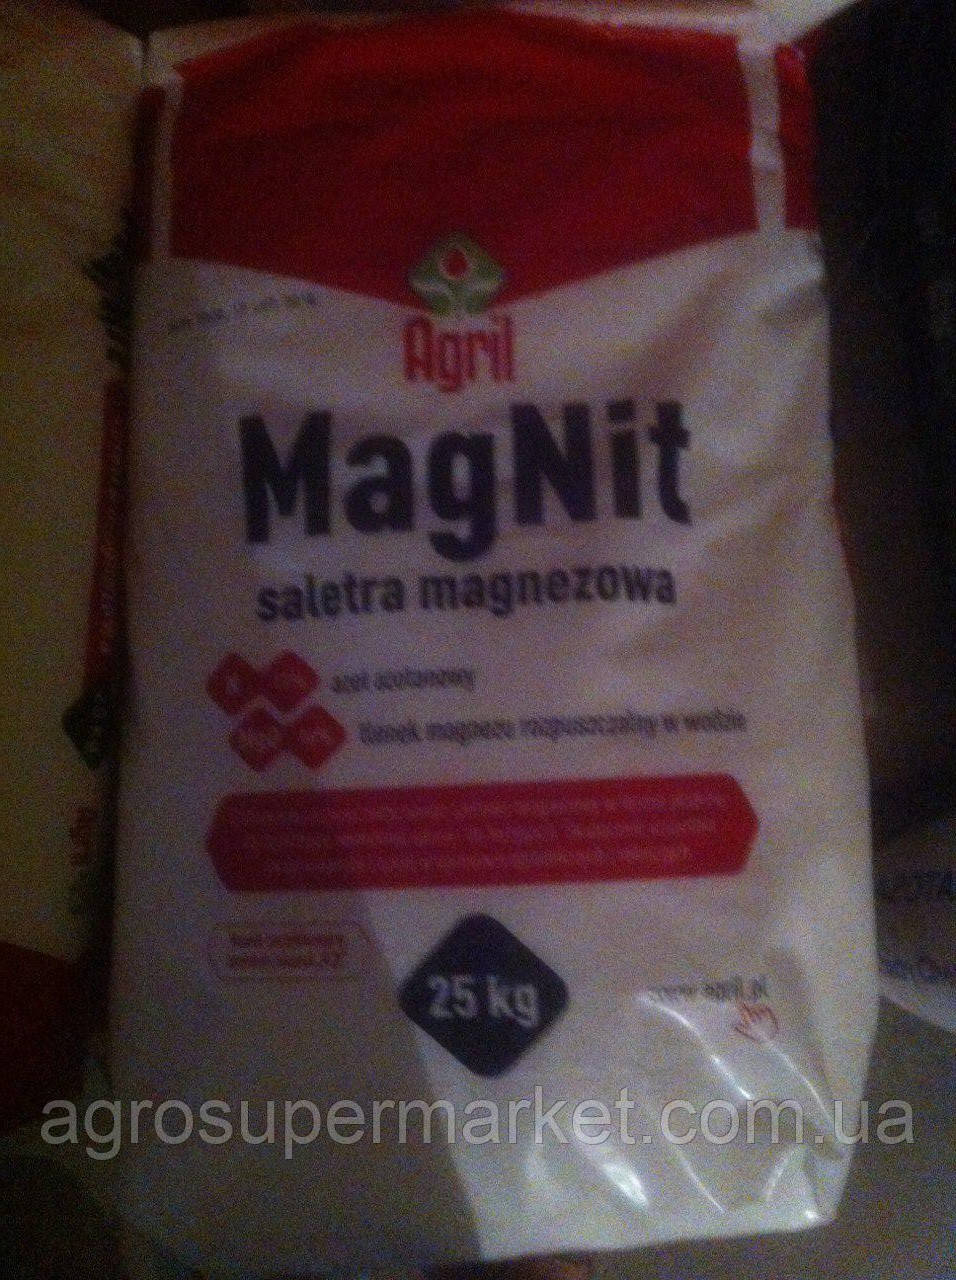 Нітрат магнію Magnit Agril — магнієва силітра (Польща)